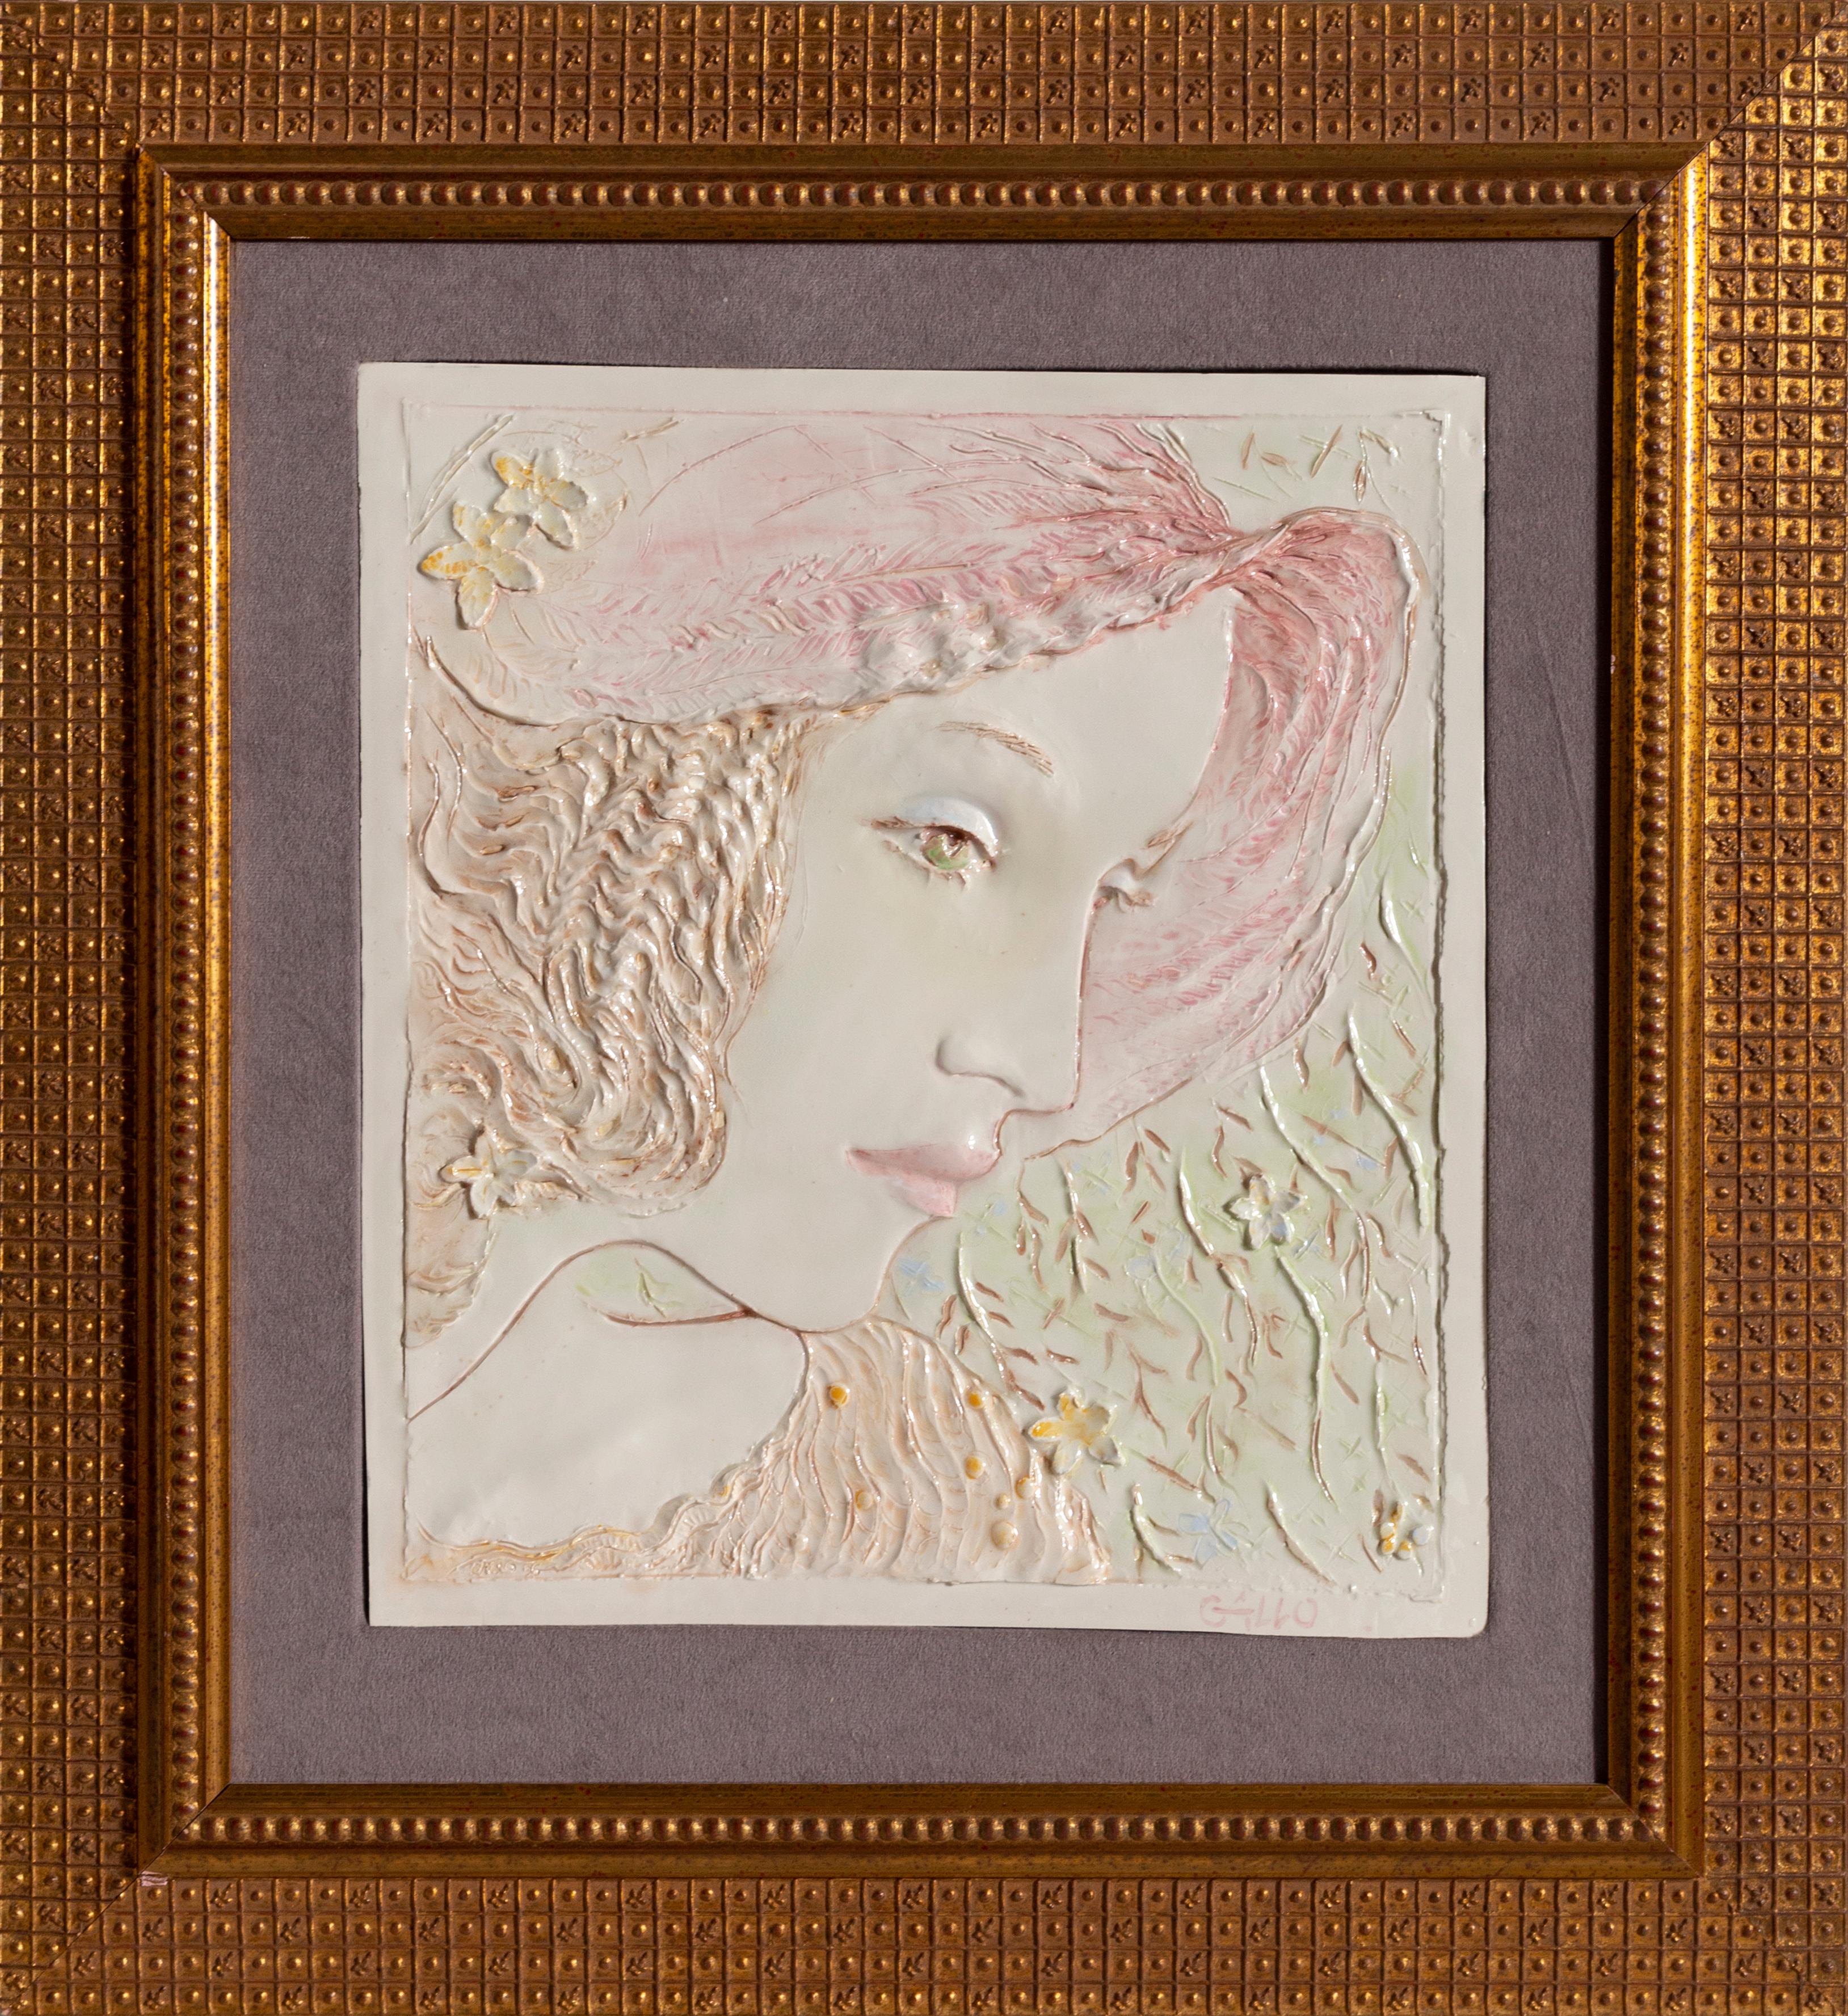 Künstler: Frank Gallo, Amerikaner (1933 - )
Titel: Rosa Hut
Medium: Keramikfliese, signiert unten rechts
Größe: 16 x 14 Zoll (40,64 x 35,56 cm)
Rahmen: 23,5 x 23,5 Zoll